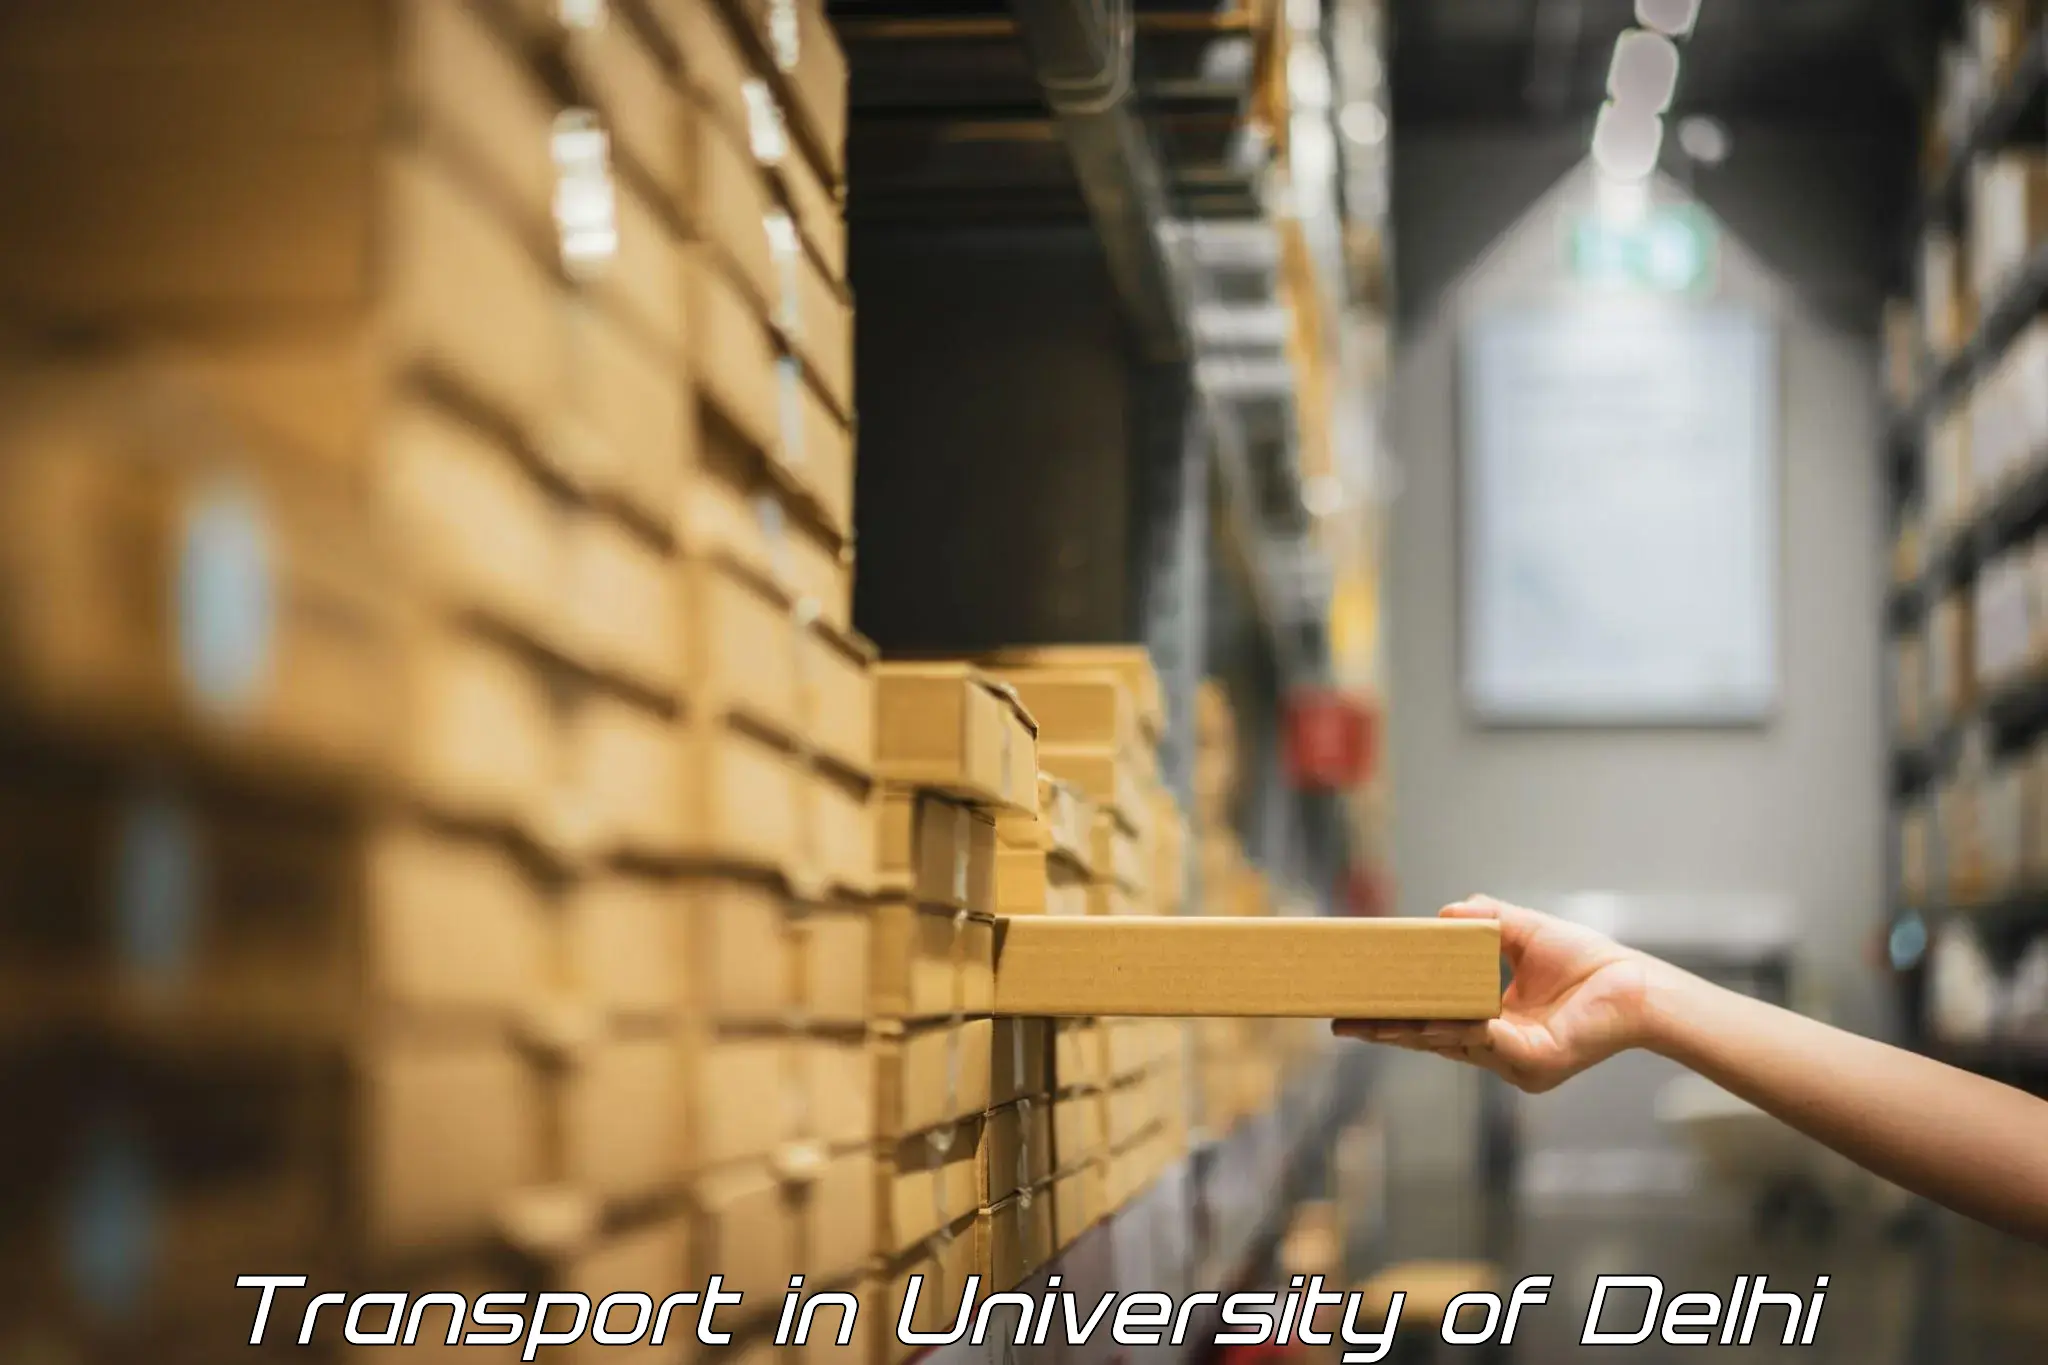 Interstate goods transport in University of Delhi